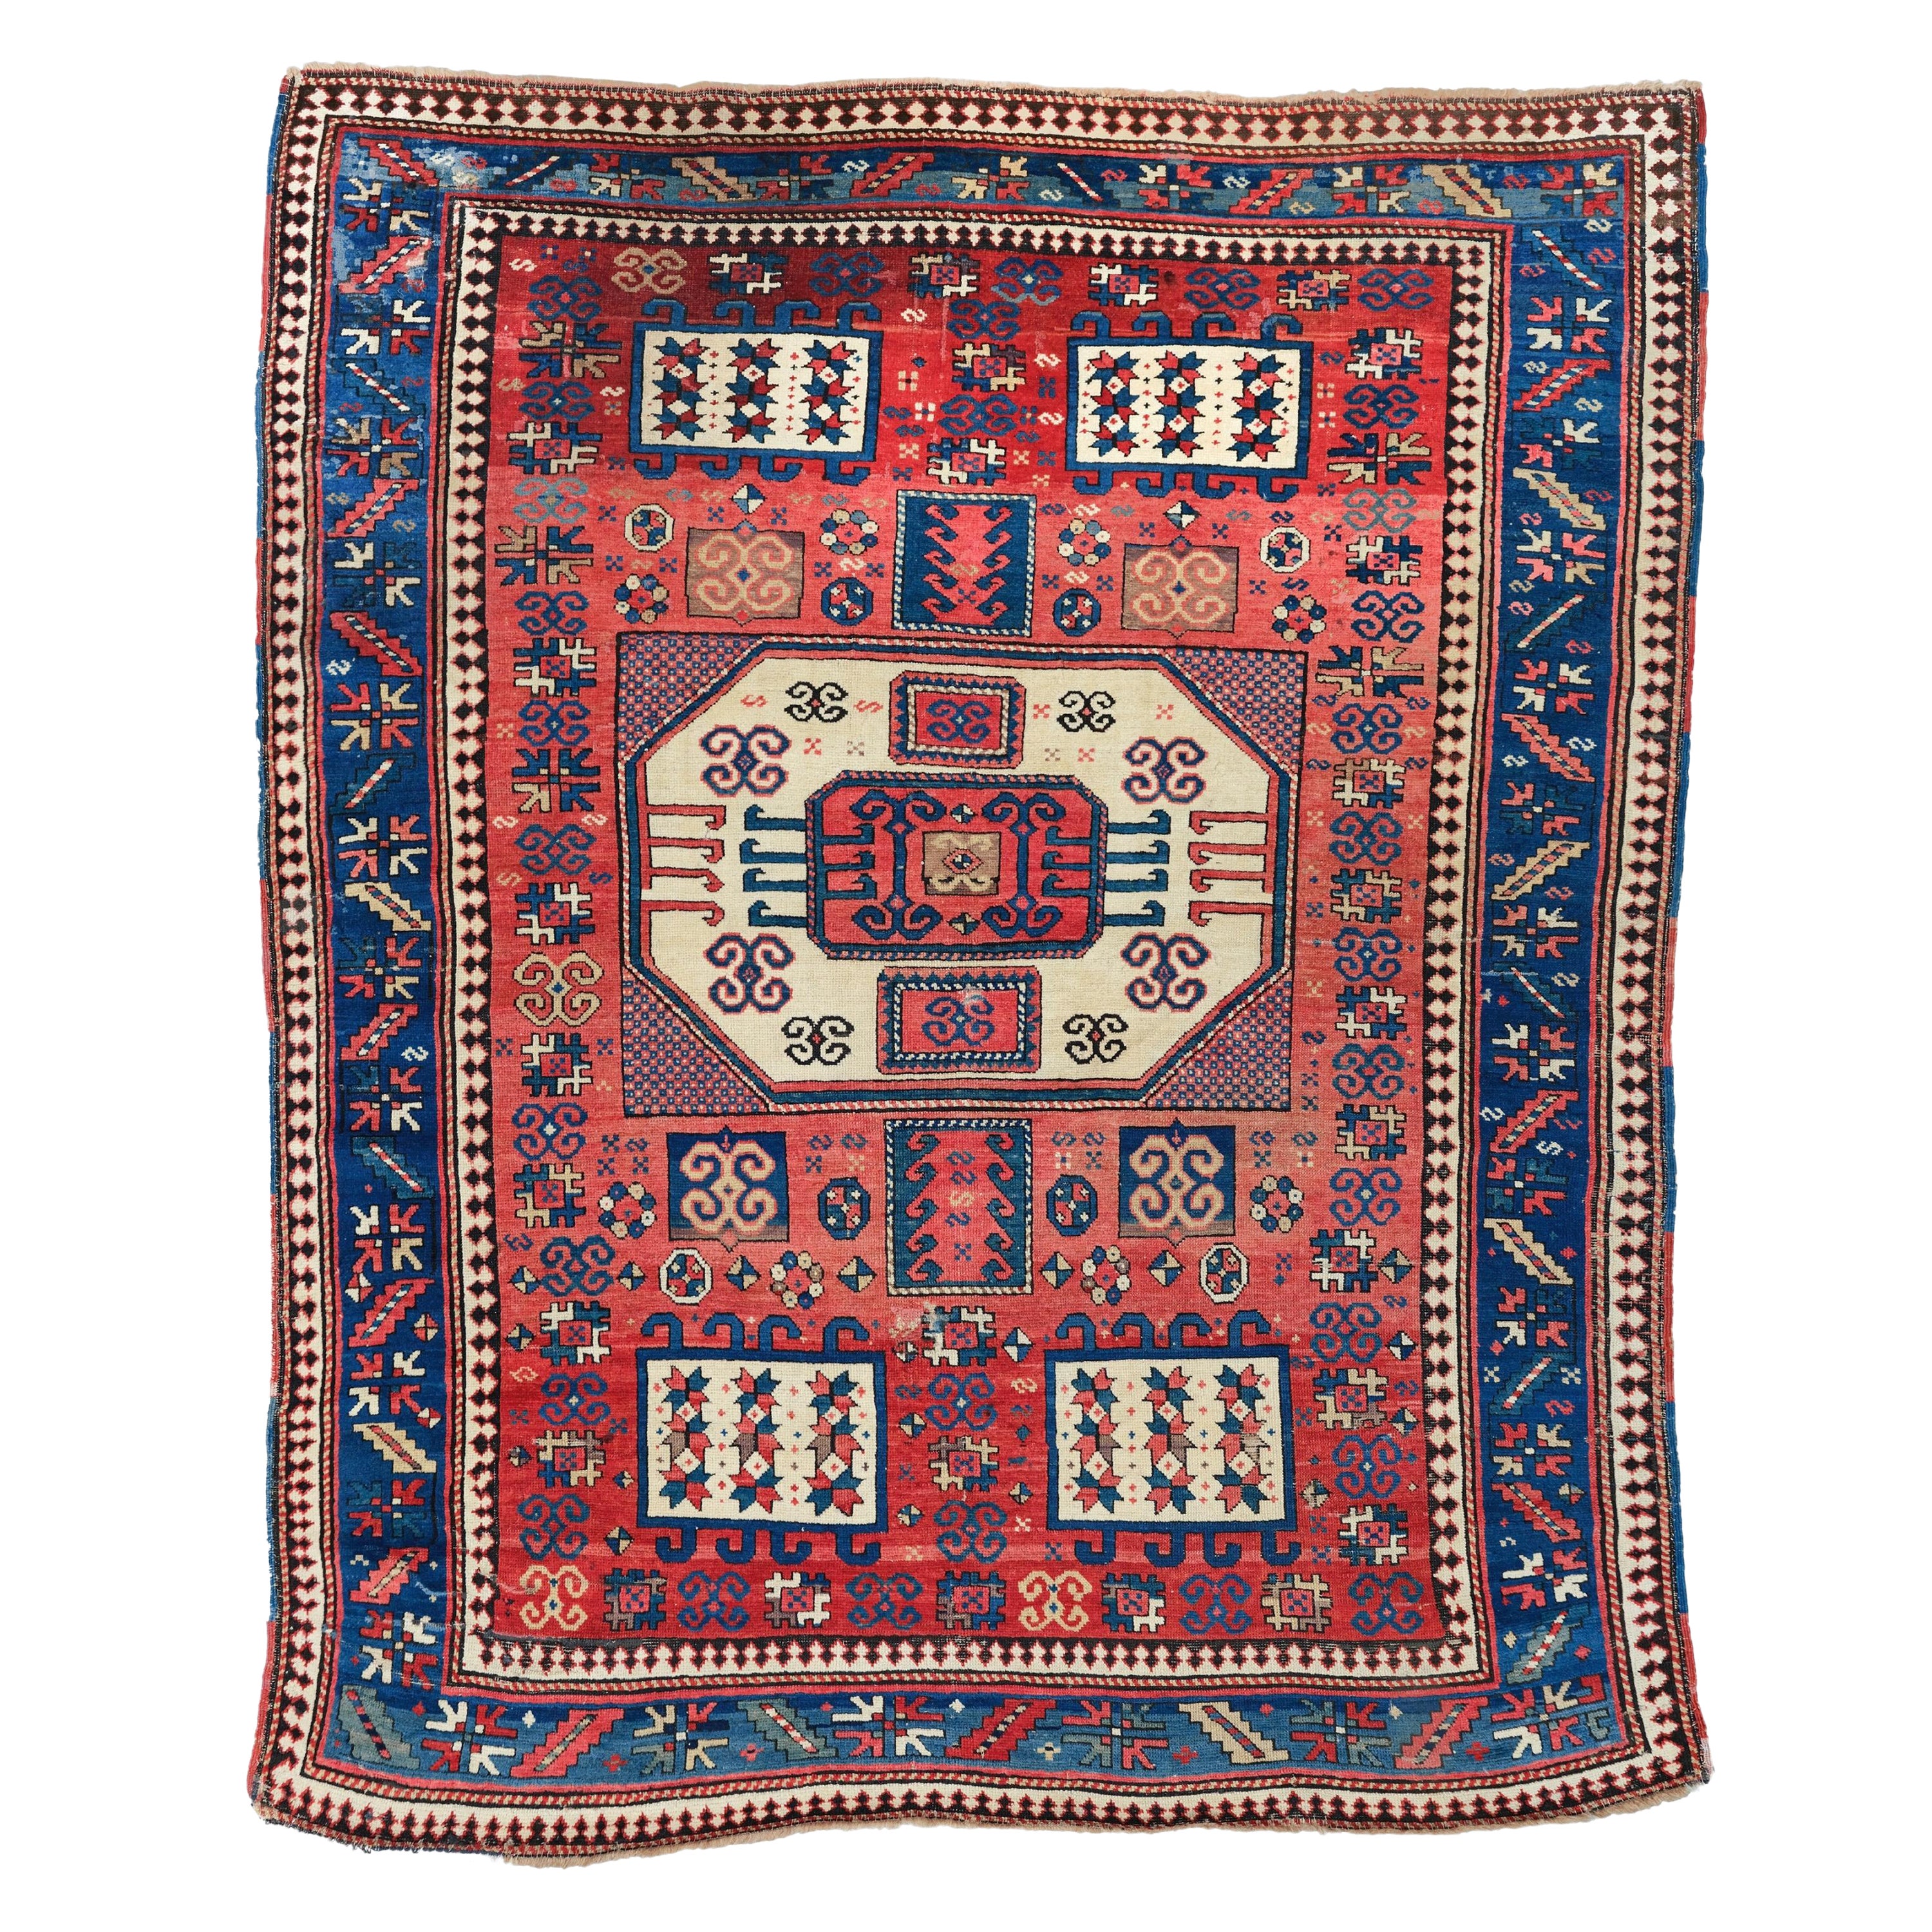 Antiker Karachop-Teppich - Karachop-Teppich aus dem 19. Jahrhundert, antiker Teppich